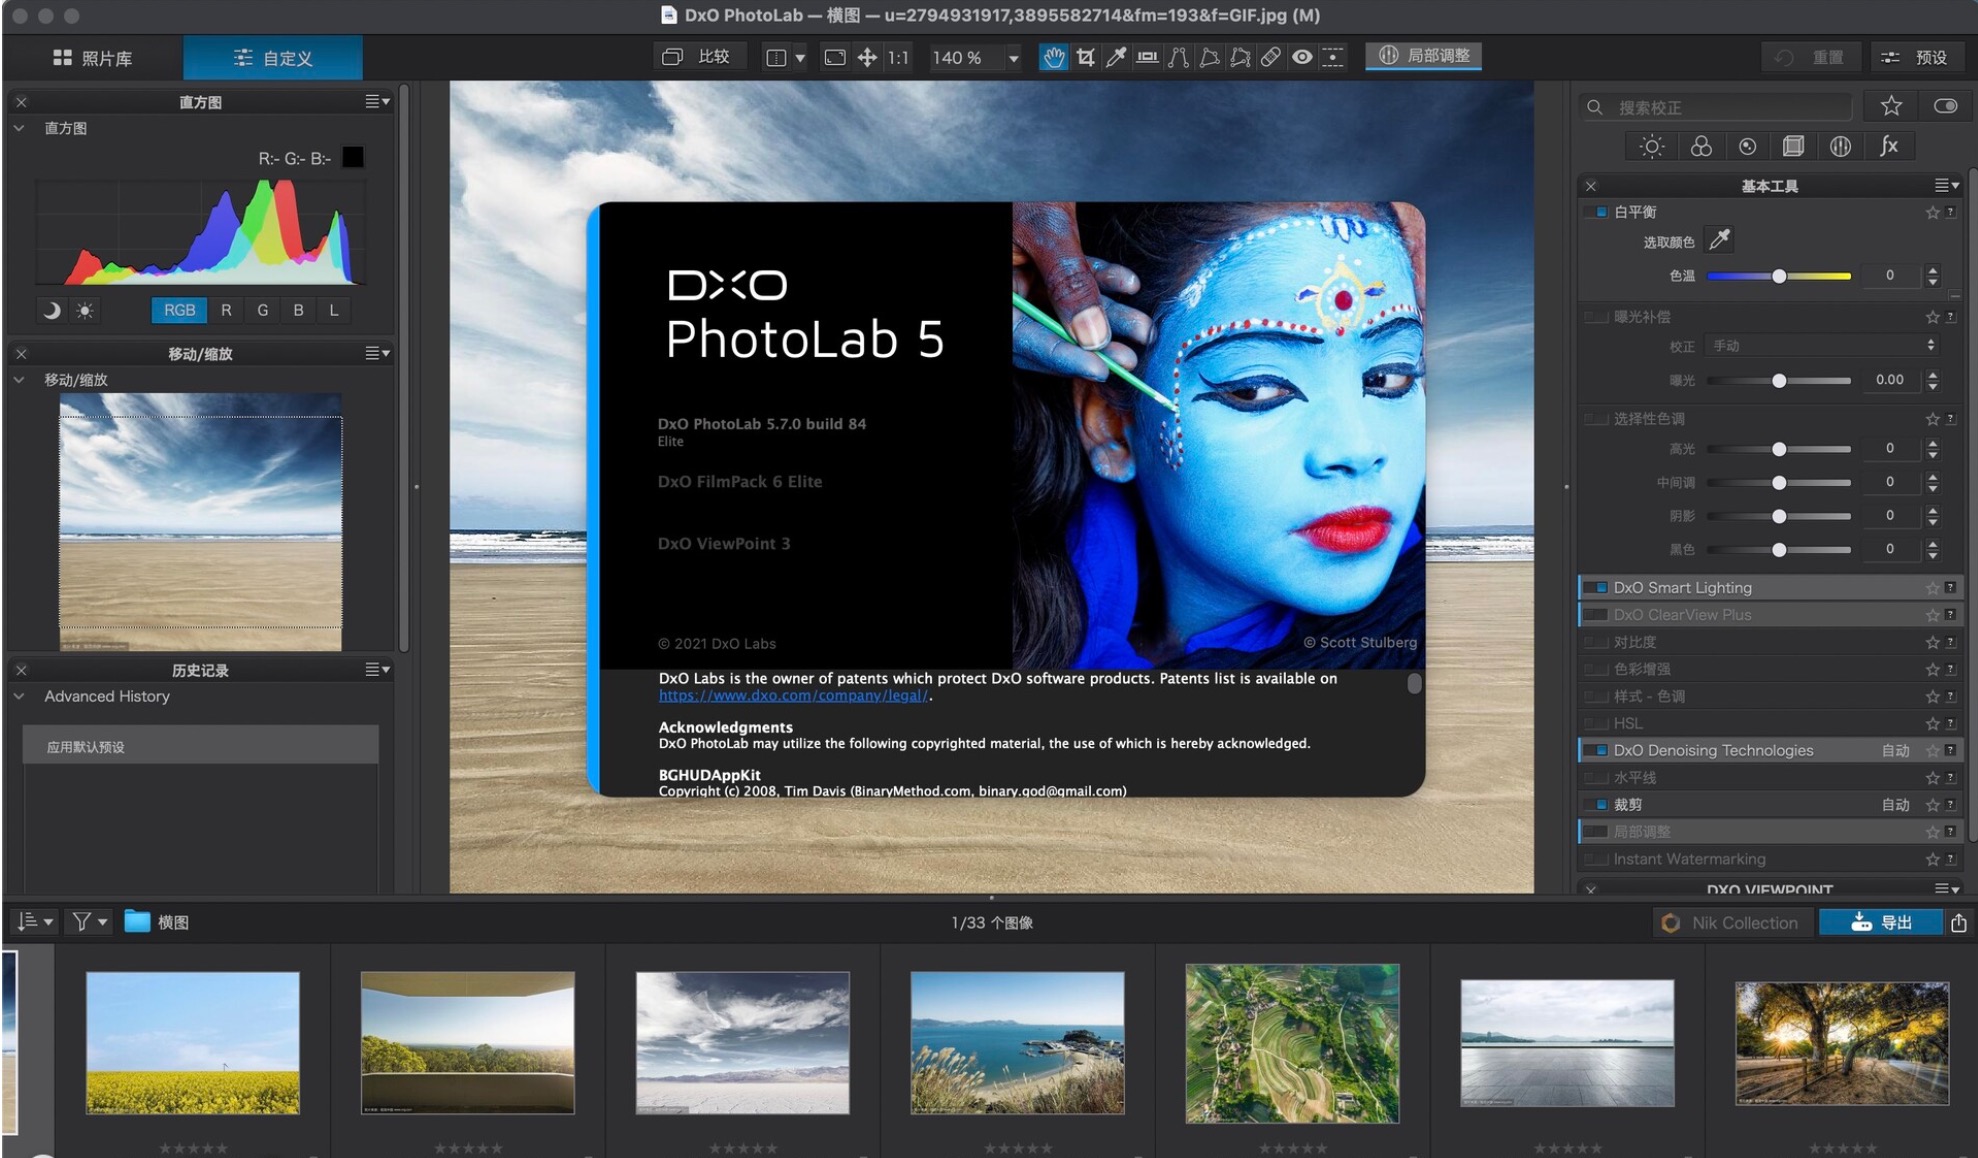 instal the new for mac DxO PhotoLab 7.1.0.94